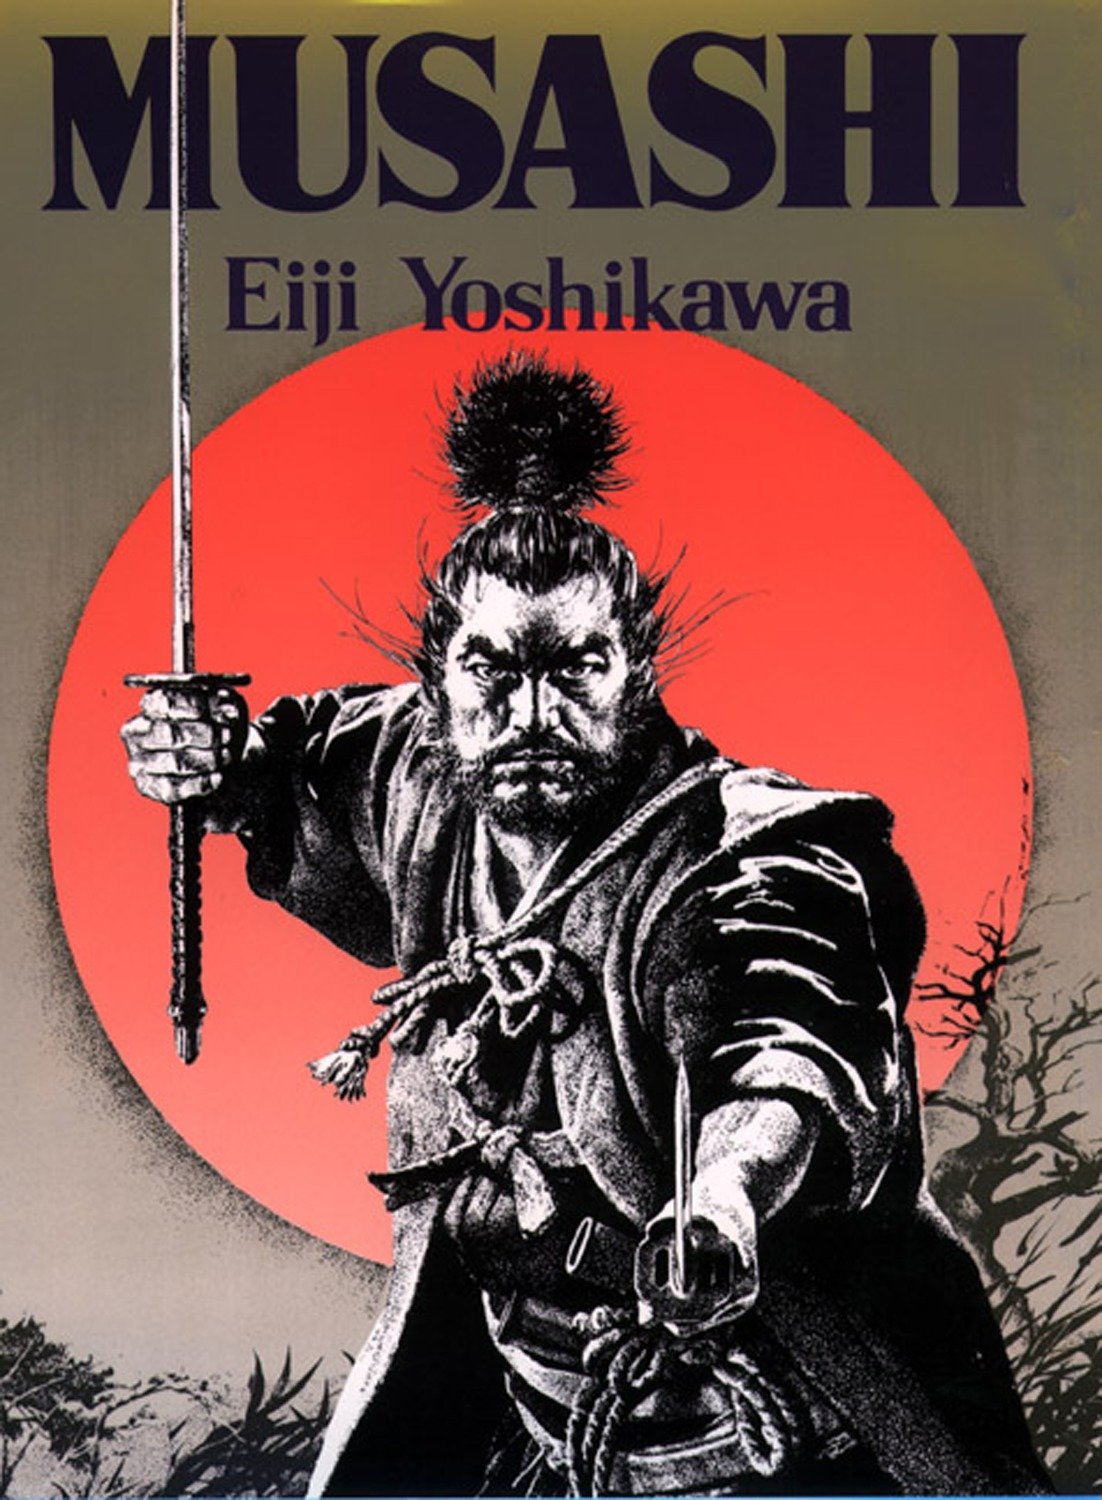 Musashi An Epic Novel of the Samurai Era cover image